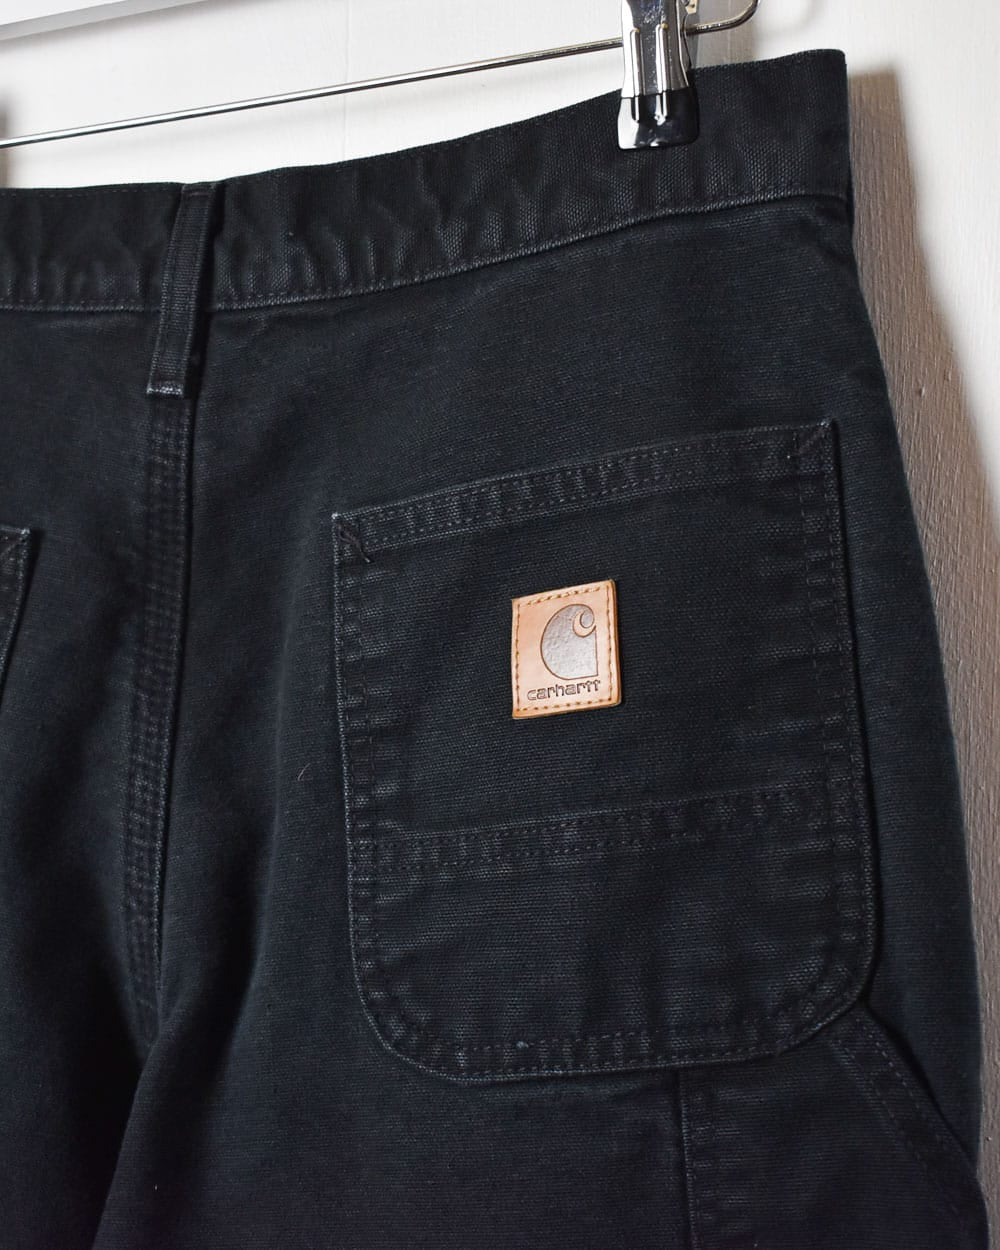 Black Carhartt Carpenter Jeans - W30 L34